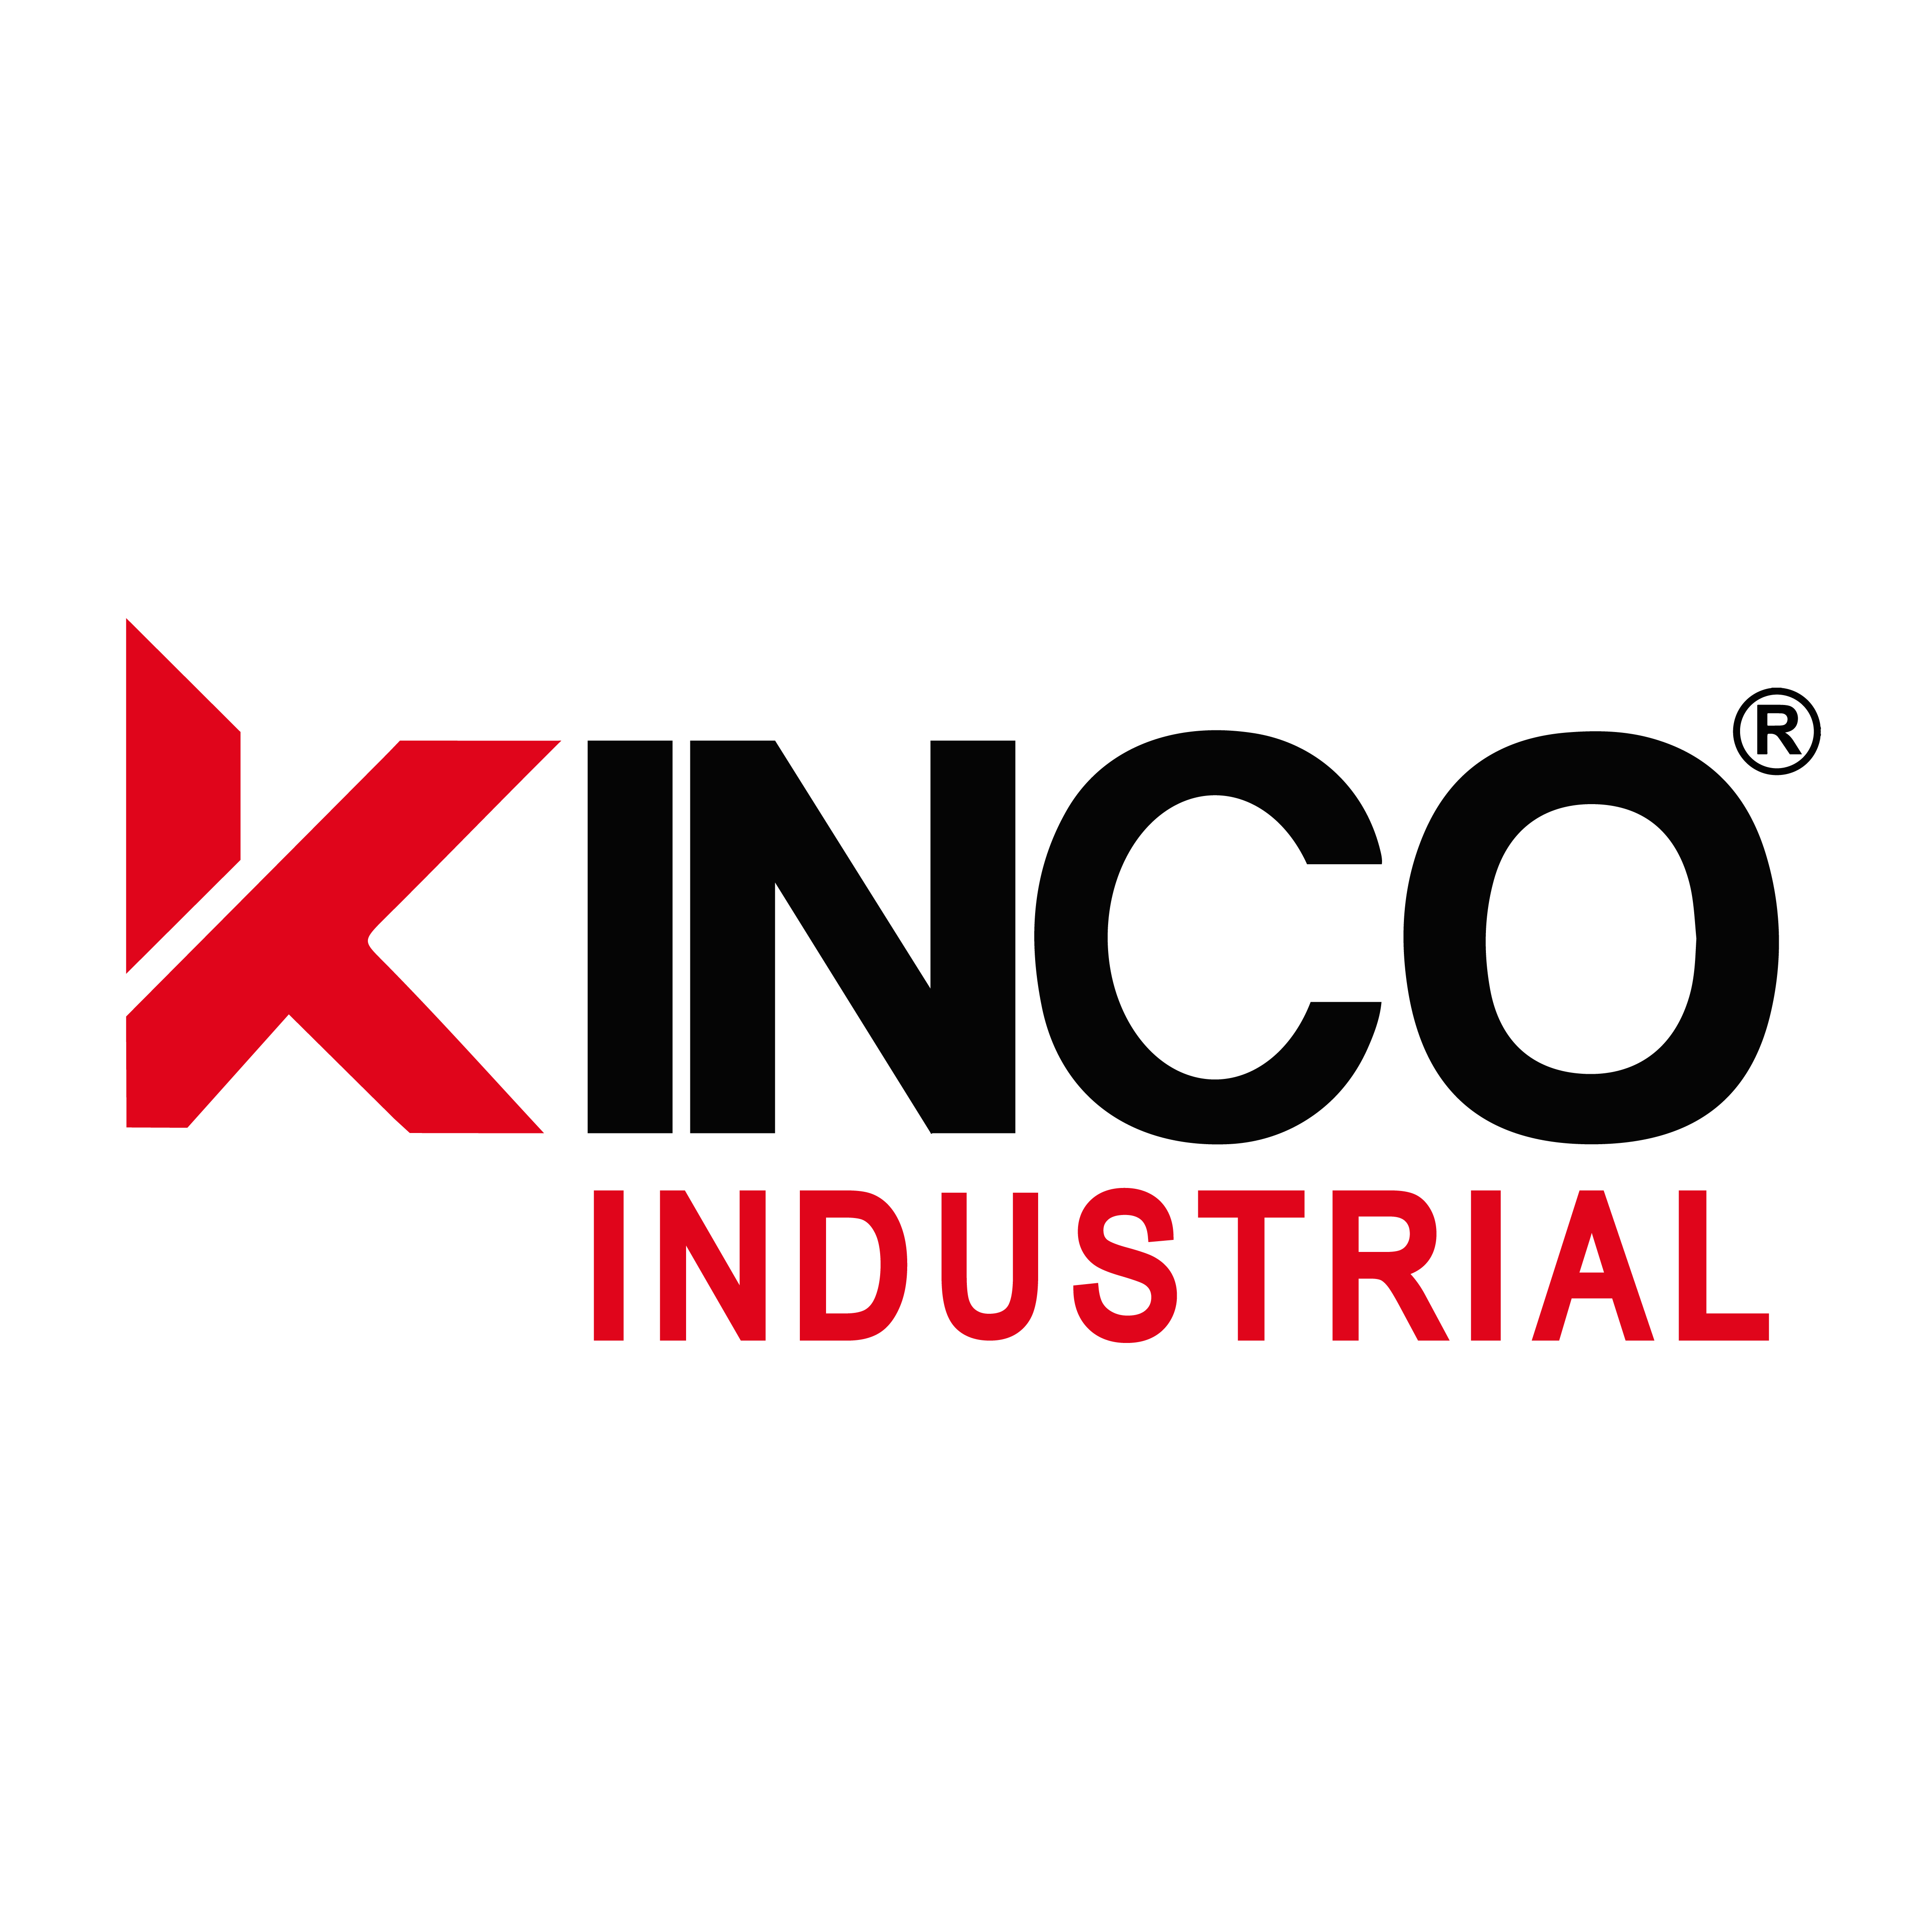 Kinco Industrial